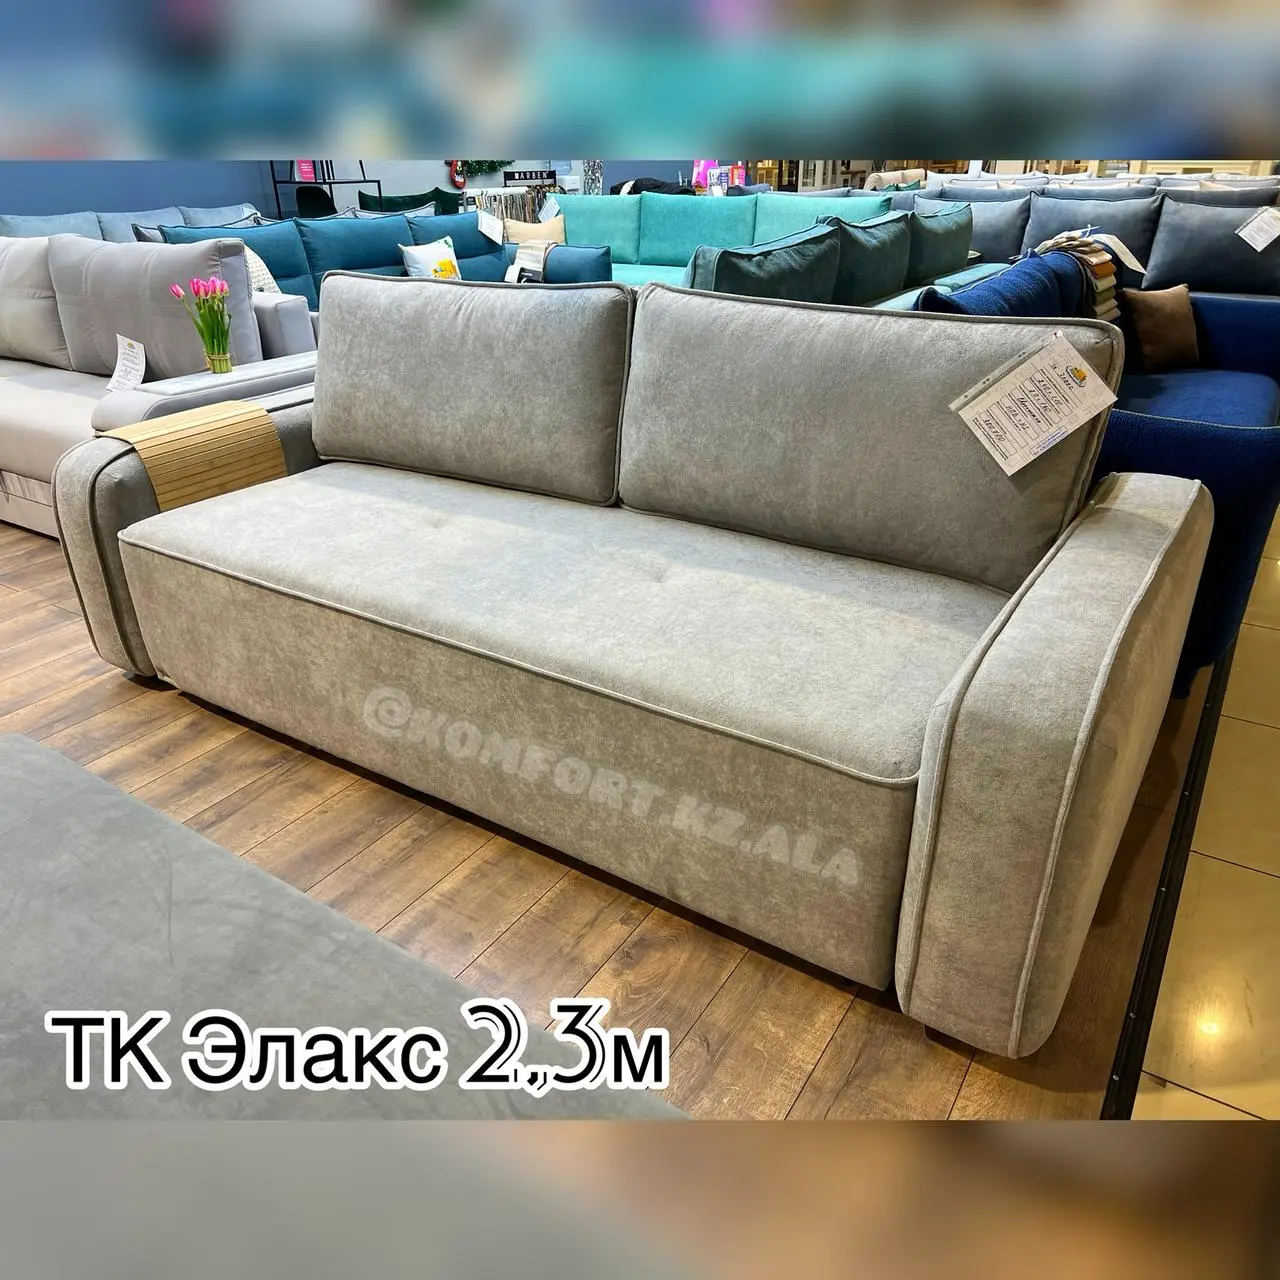 Мебельный салон "Komfort.kz"